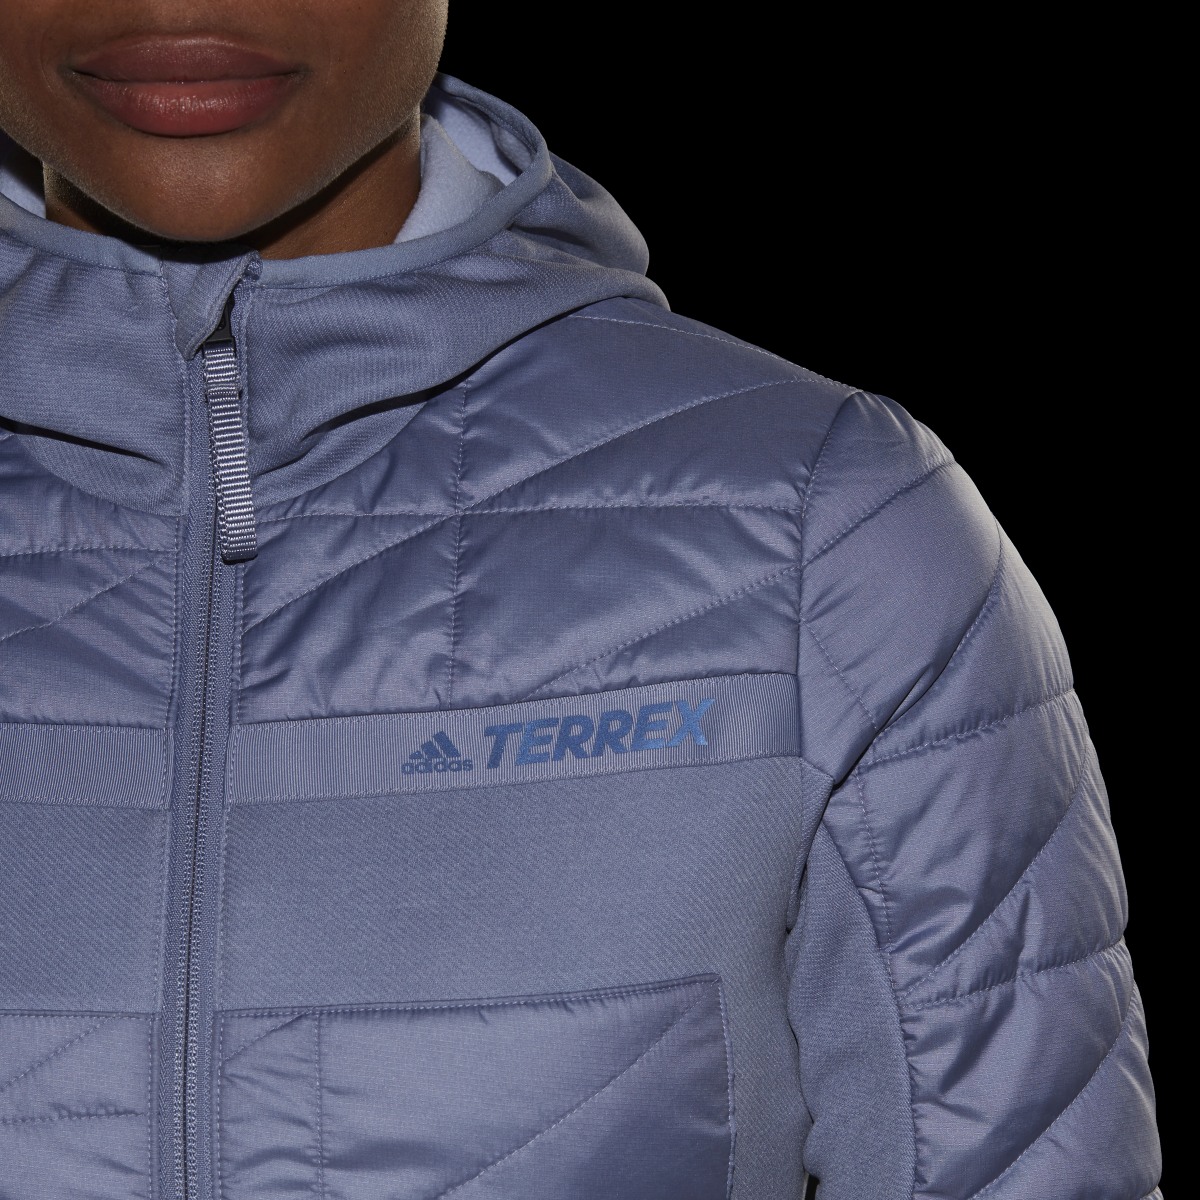 Adidas Terrex Multi Primegreen Hybrid Insulated Jacket. 9